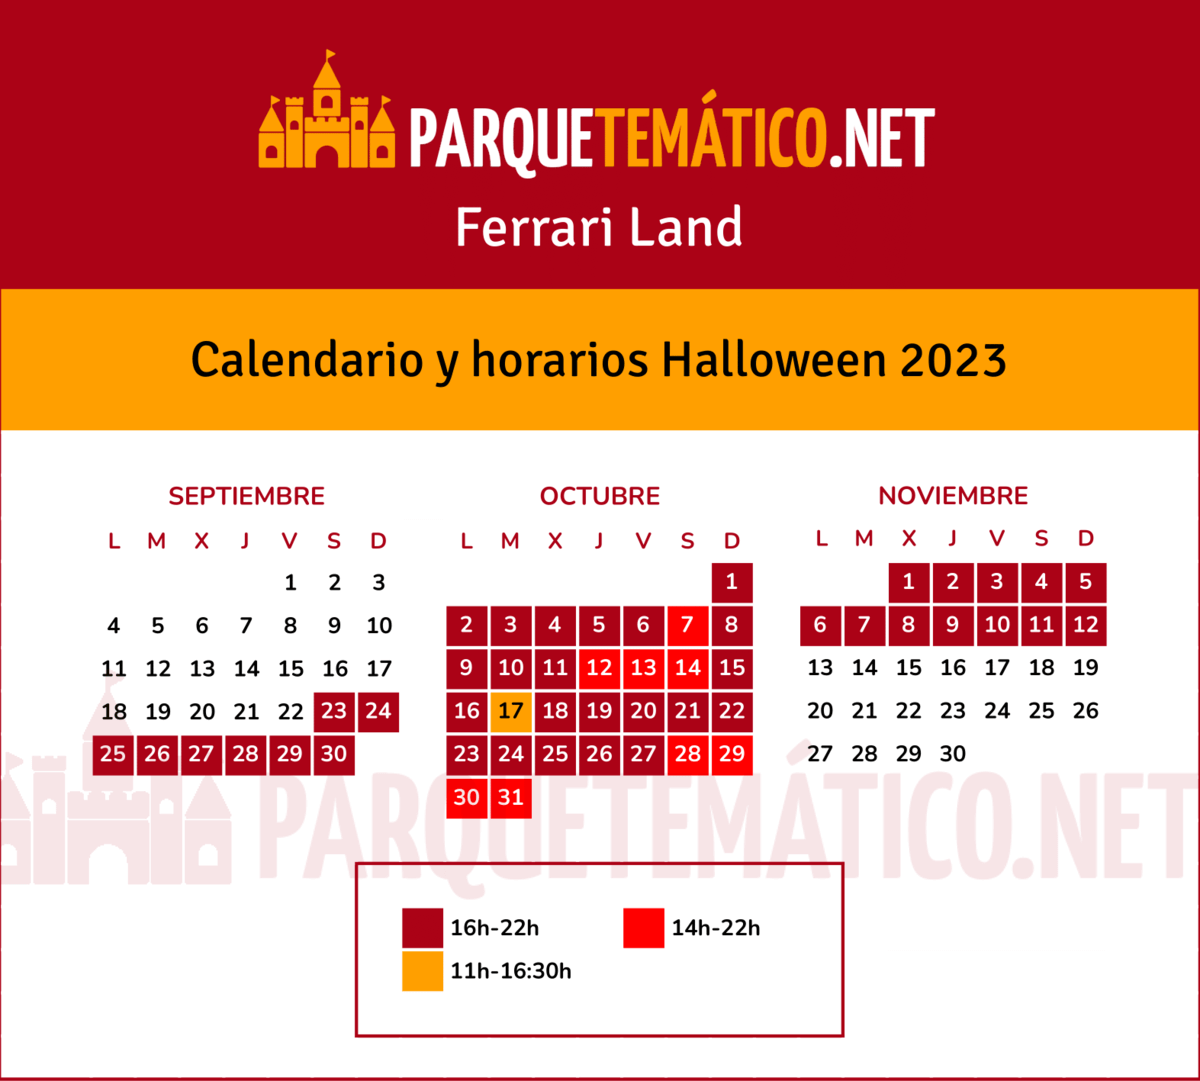 Calendario y horarios de apertura Ferrari Land Halloween PortAventura 2023